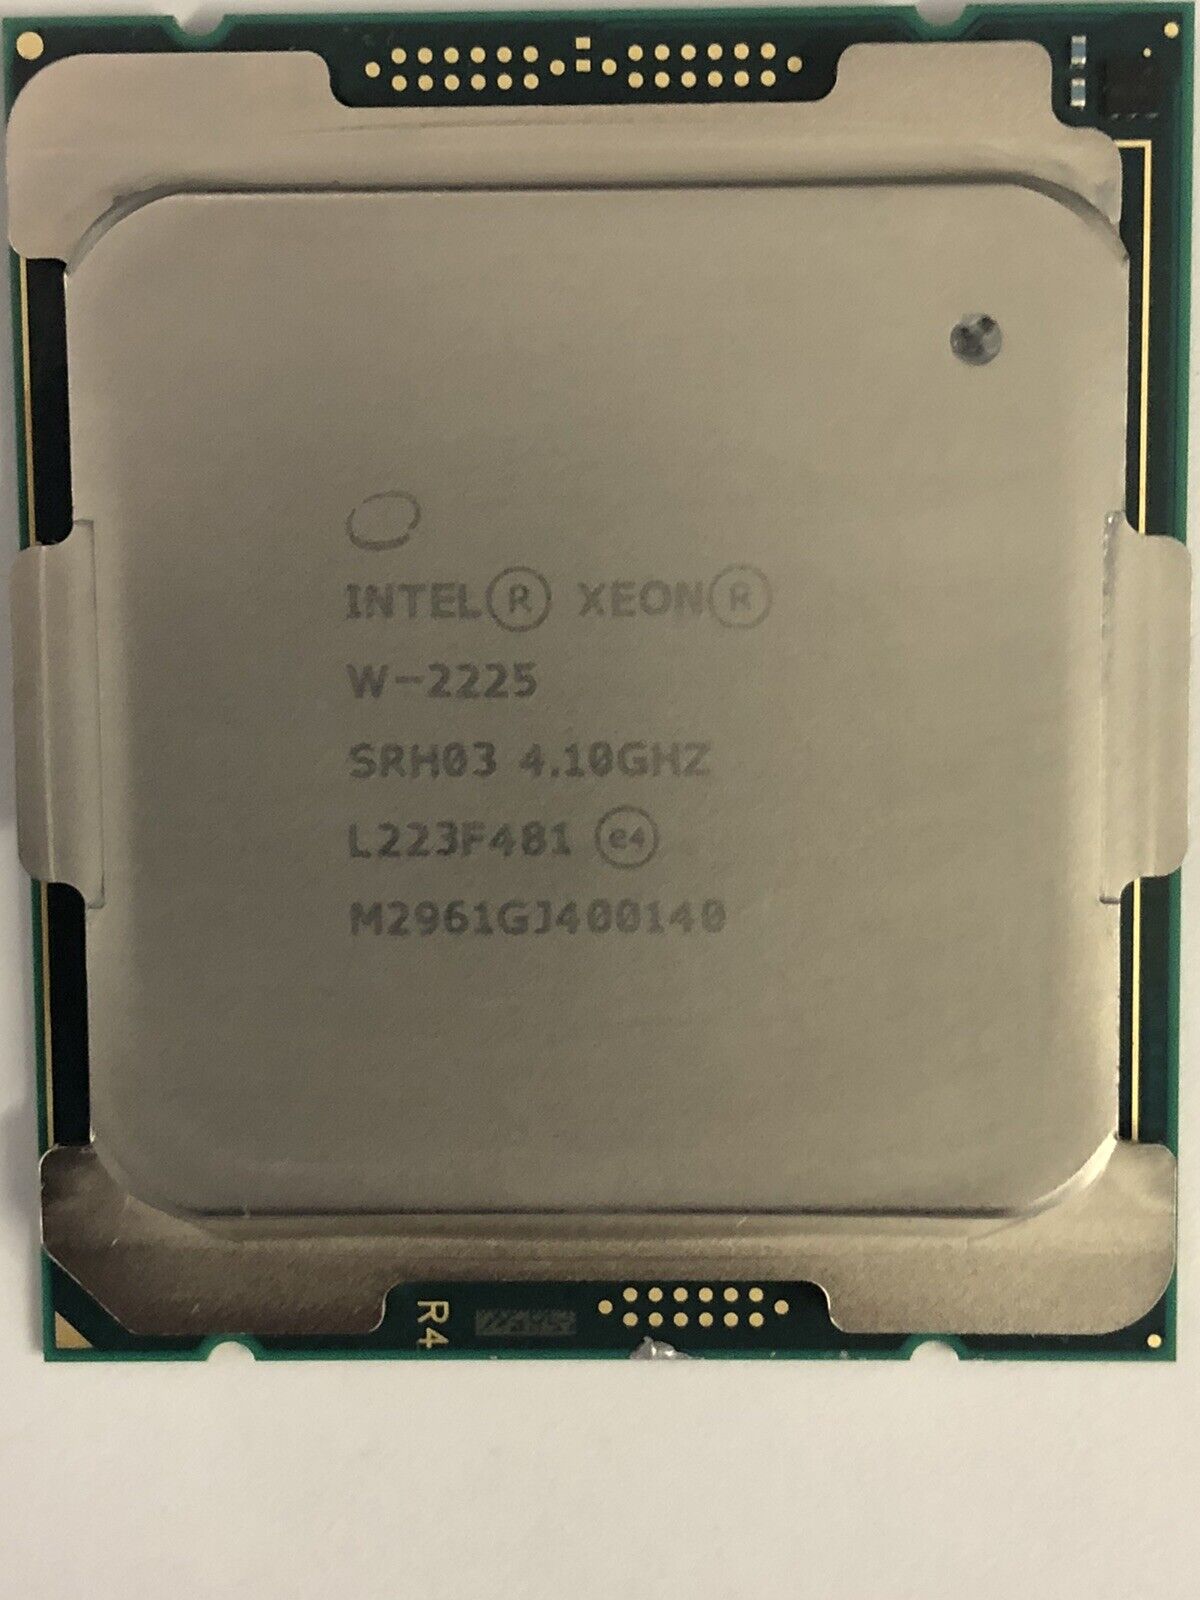 Intel Xeon CPU  SRH03 - W-2225 4.10Ghz 4-CORE cascade LAKE LGA2066 